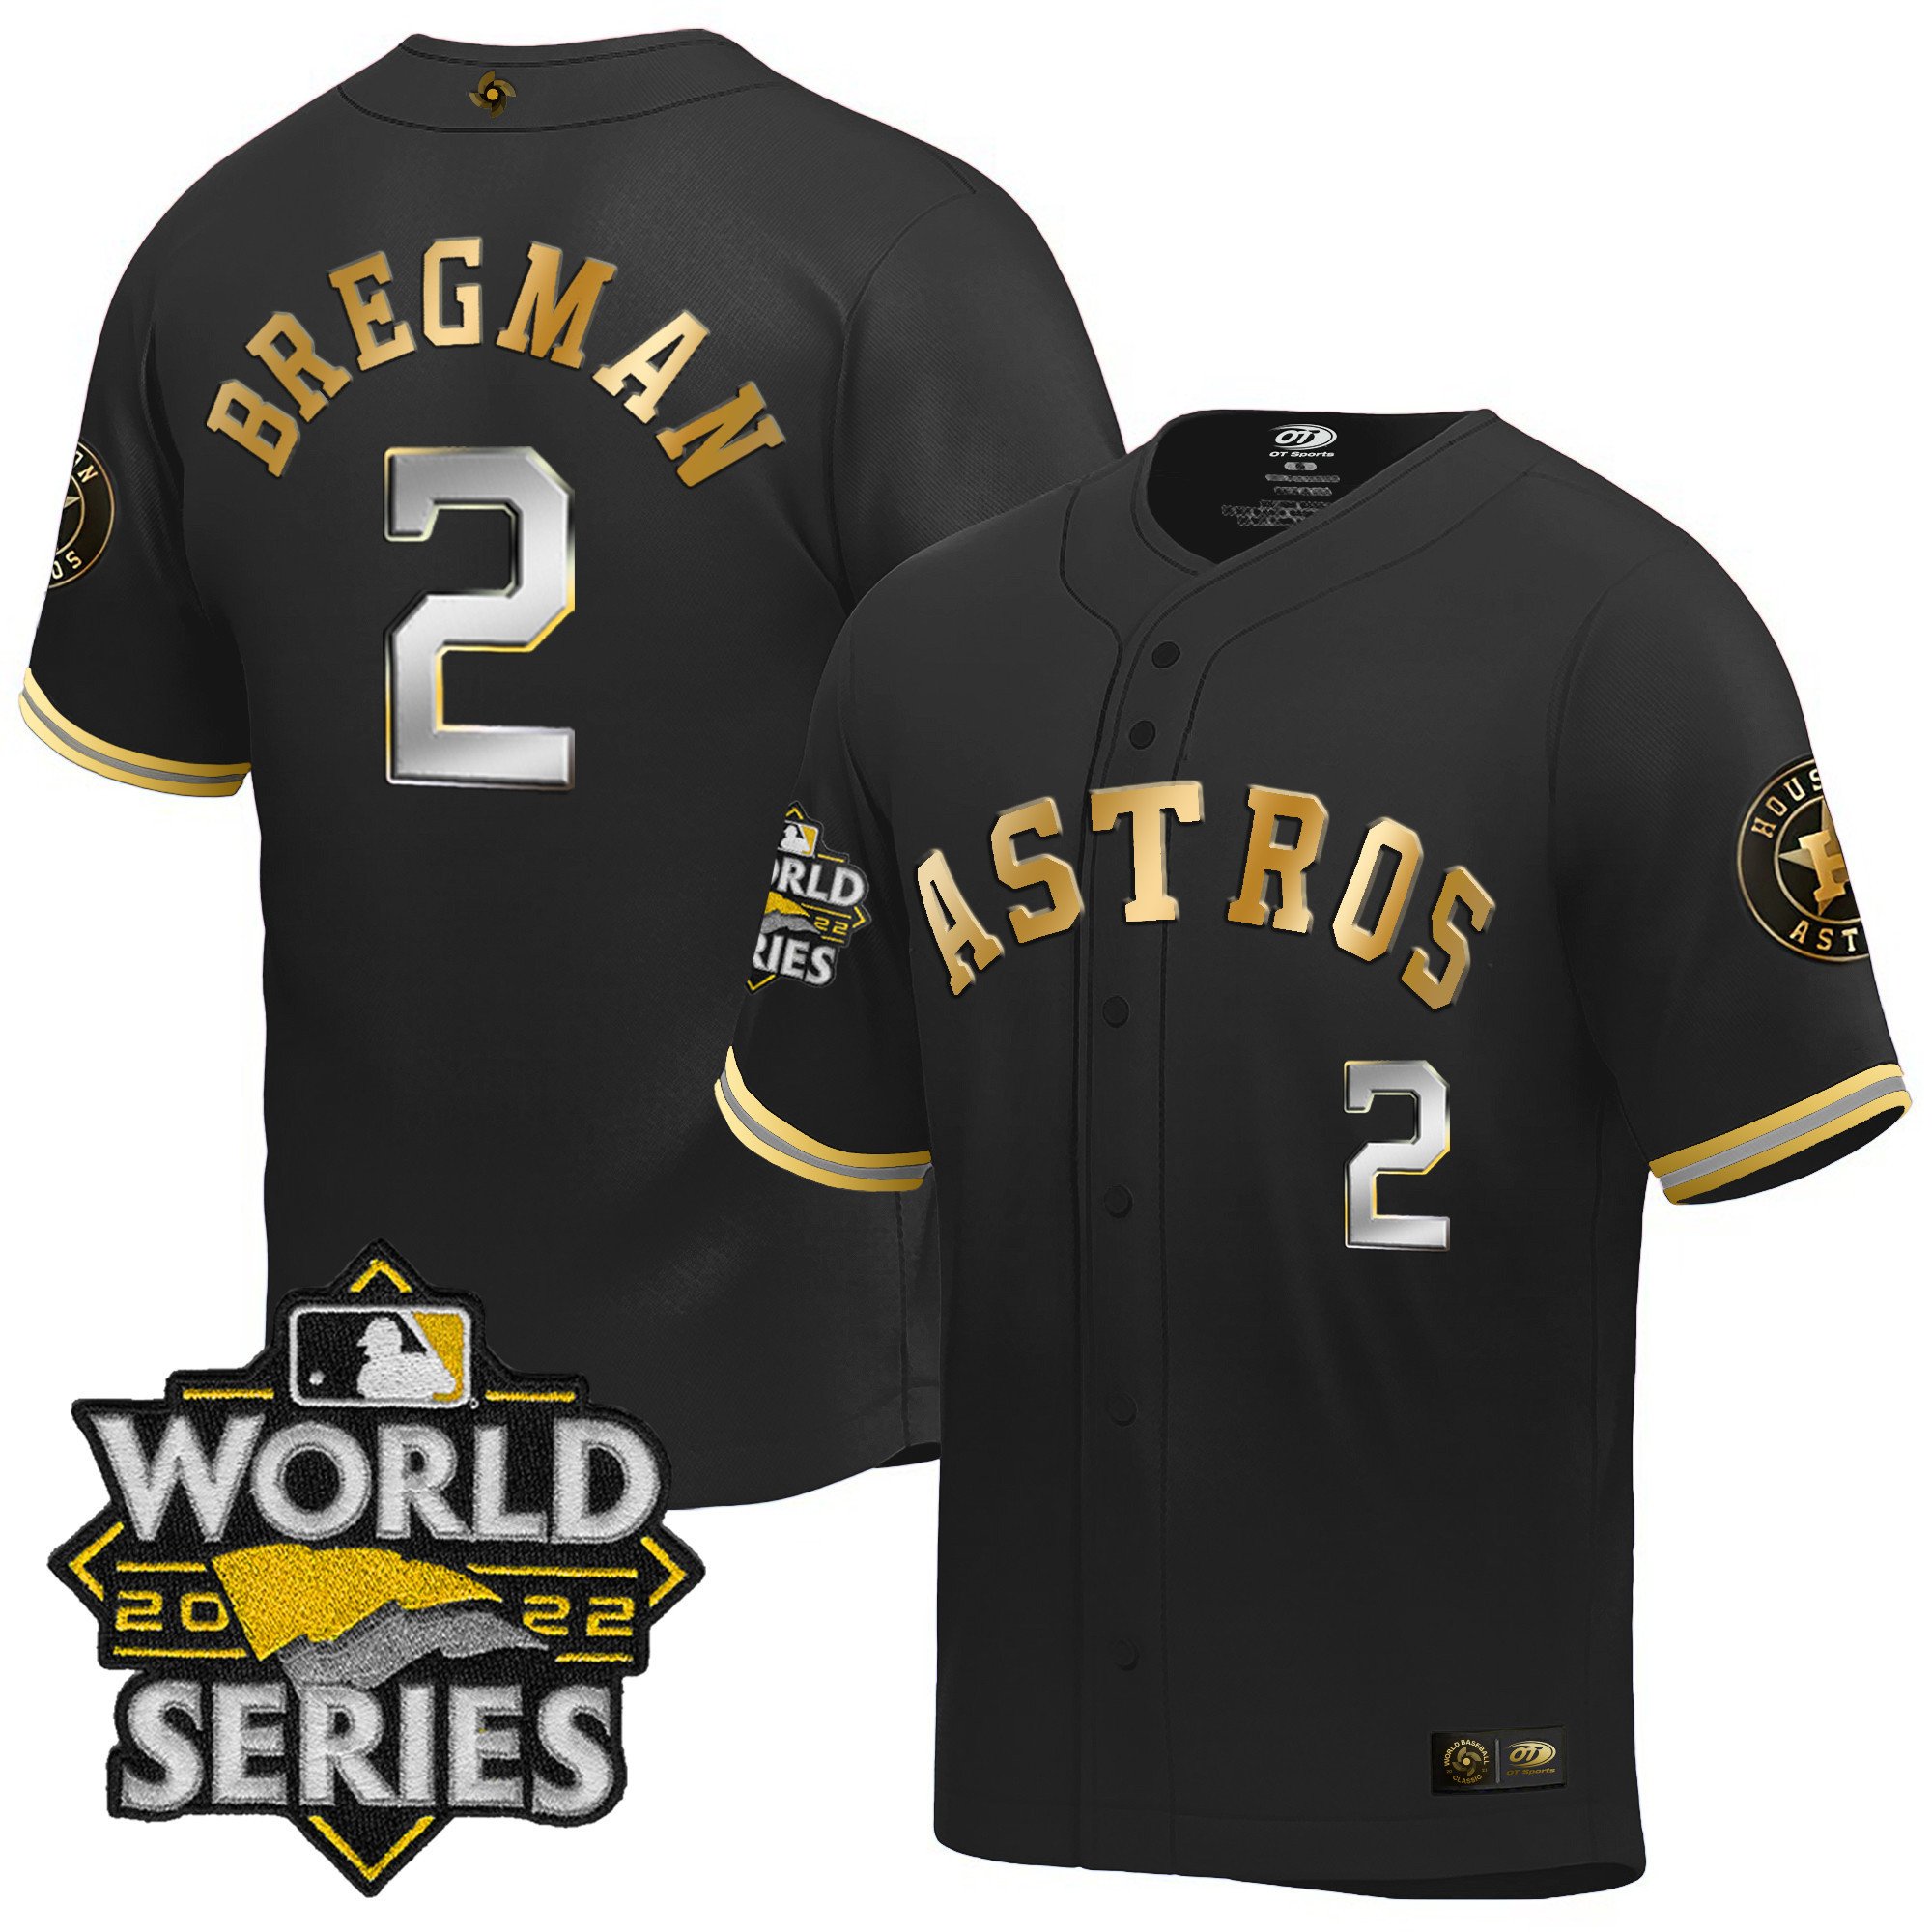 Alex Bregman Black & Gold Houston Astros Baseball Jersey